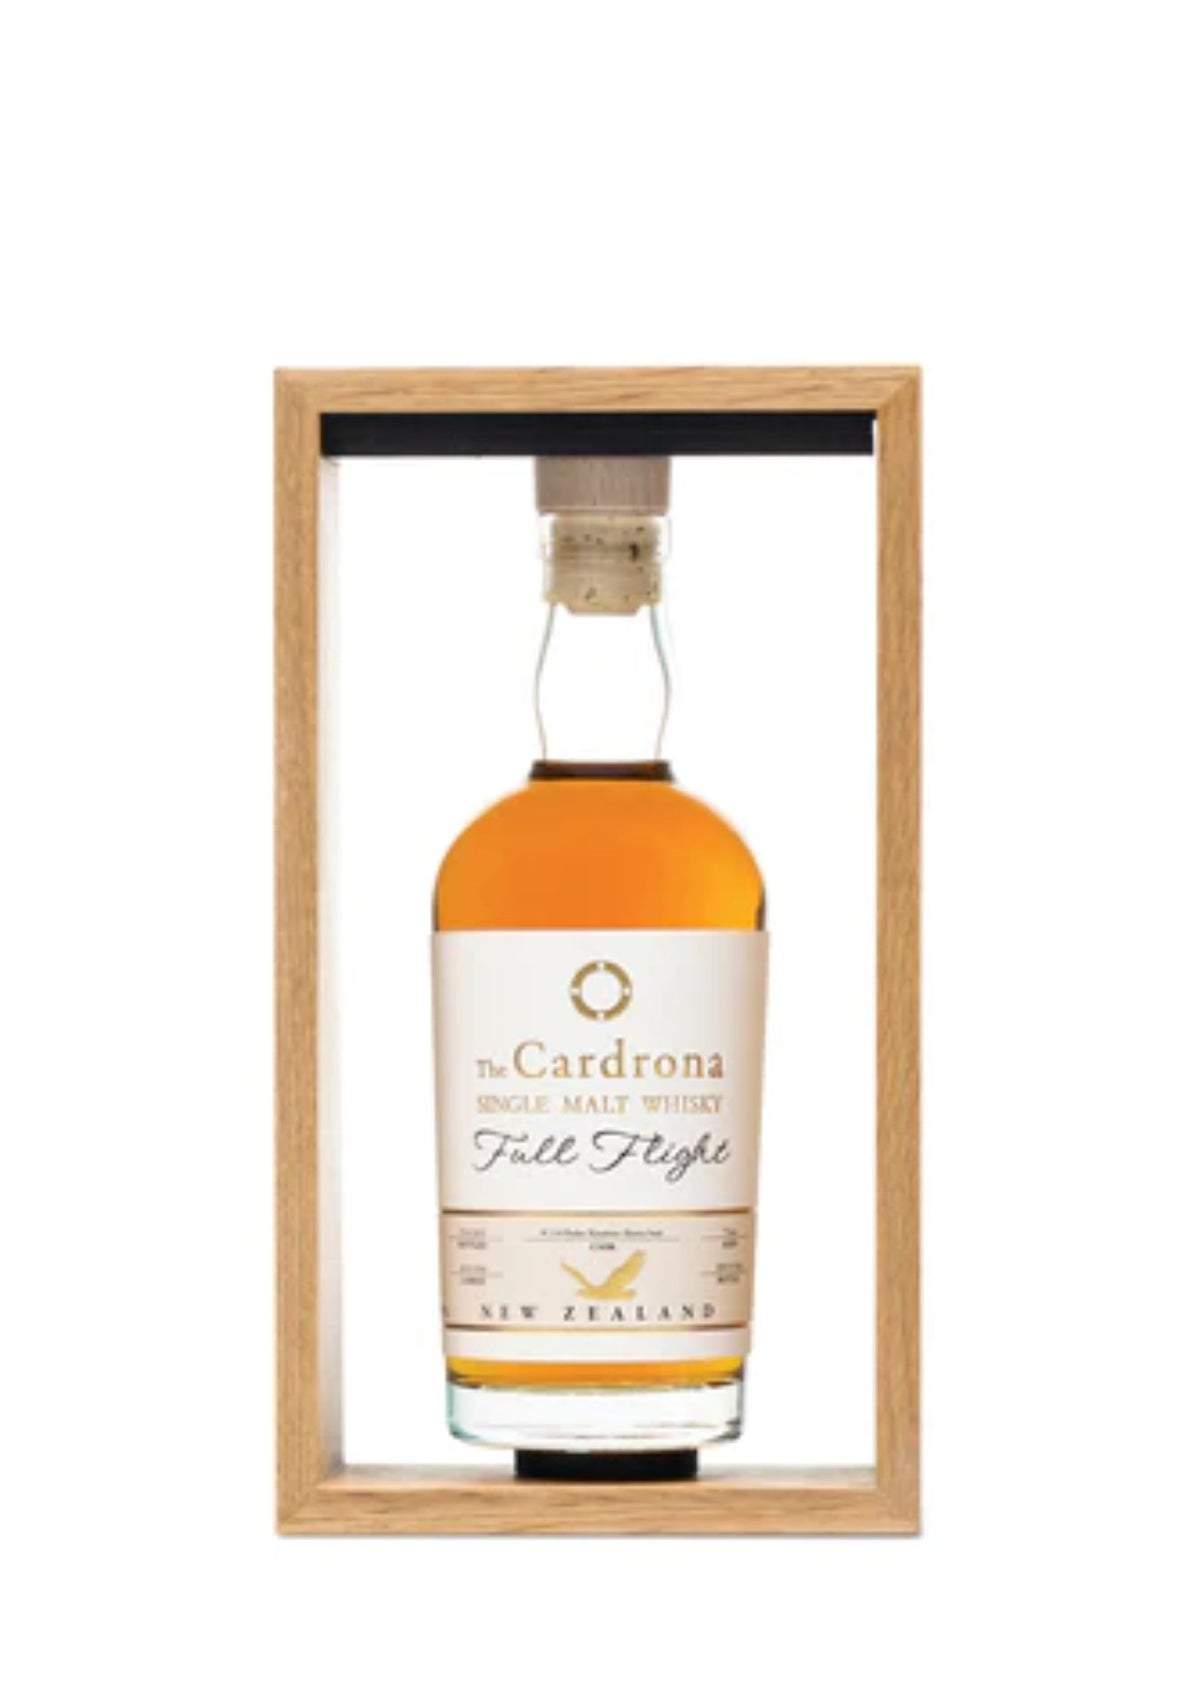 The Cardrona 7-Year-Old Single Malt Whisky Full Flight Sherry Cask #114, 62.7%